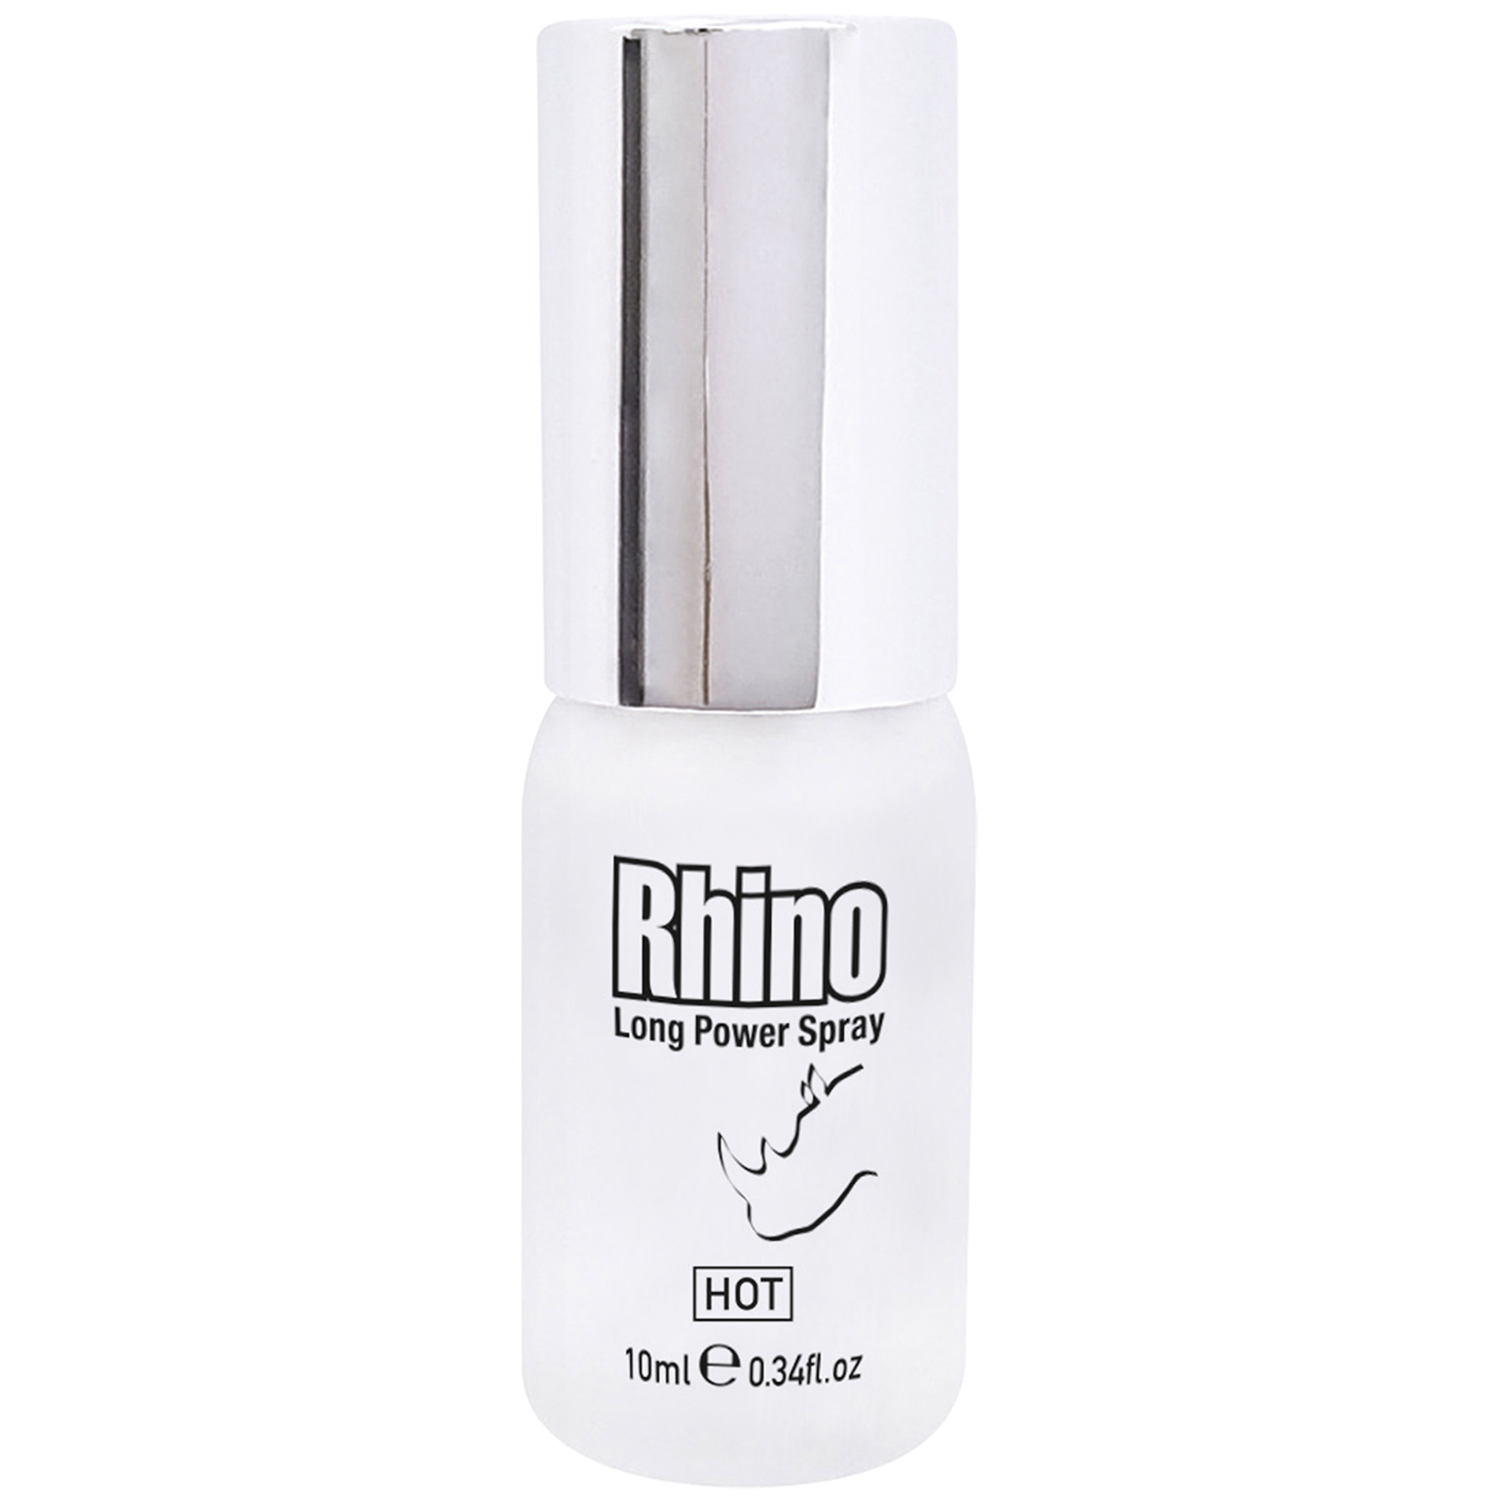 Rhino Spray Hot Long Power Spray 10 ml - Hot